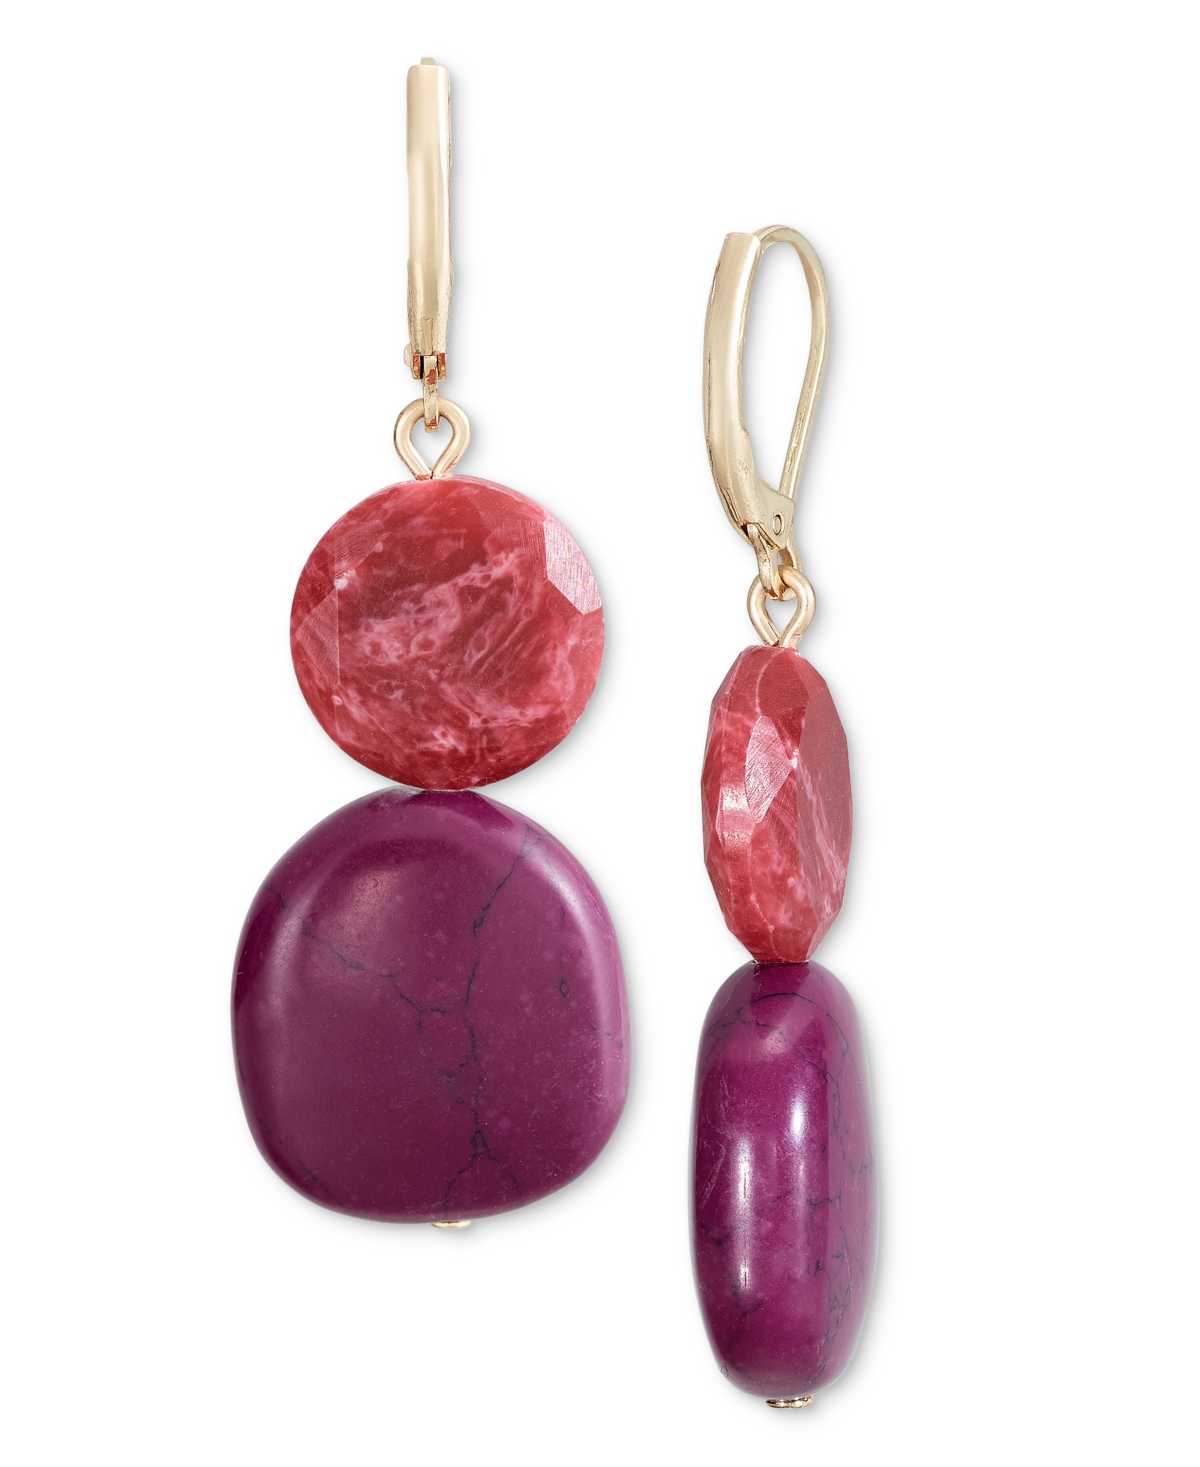 Gold-Tone Stone Double Drop Earrings, Created for Macy's - Purple